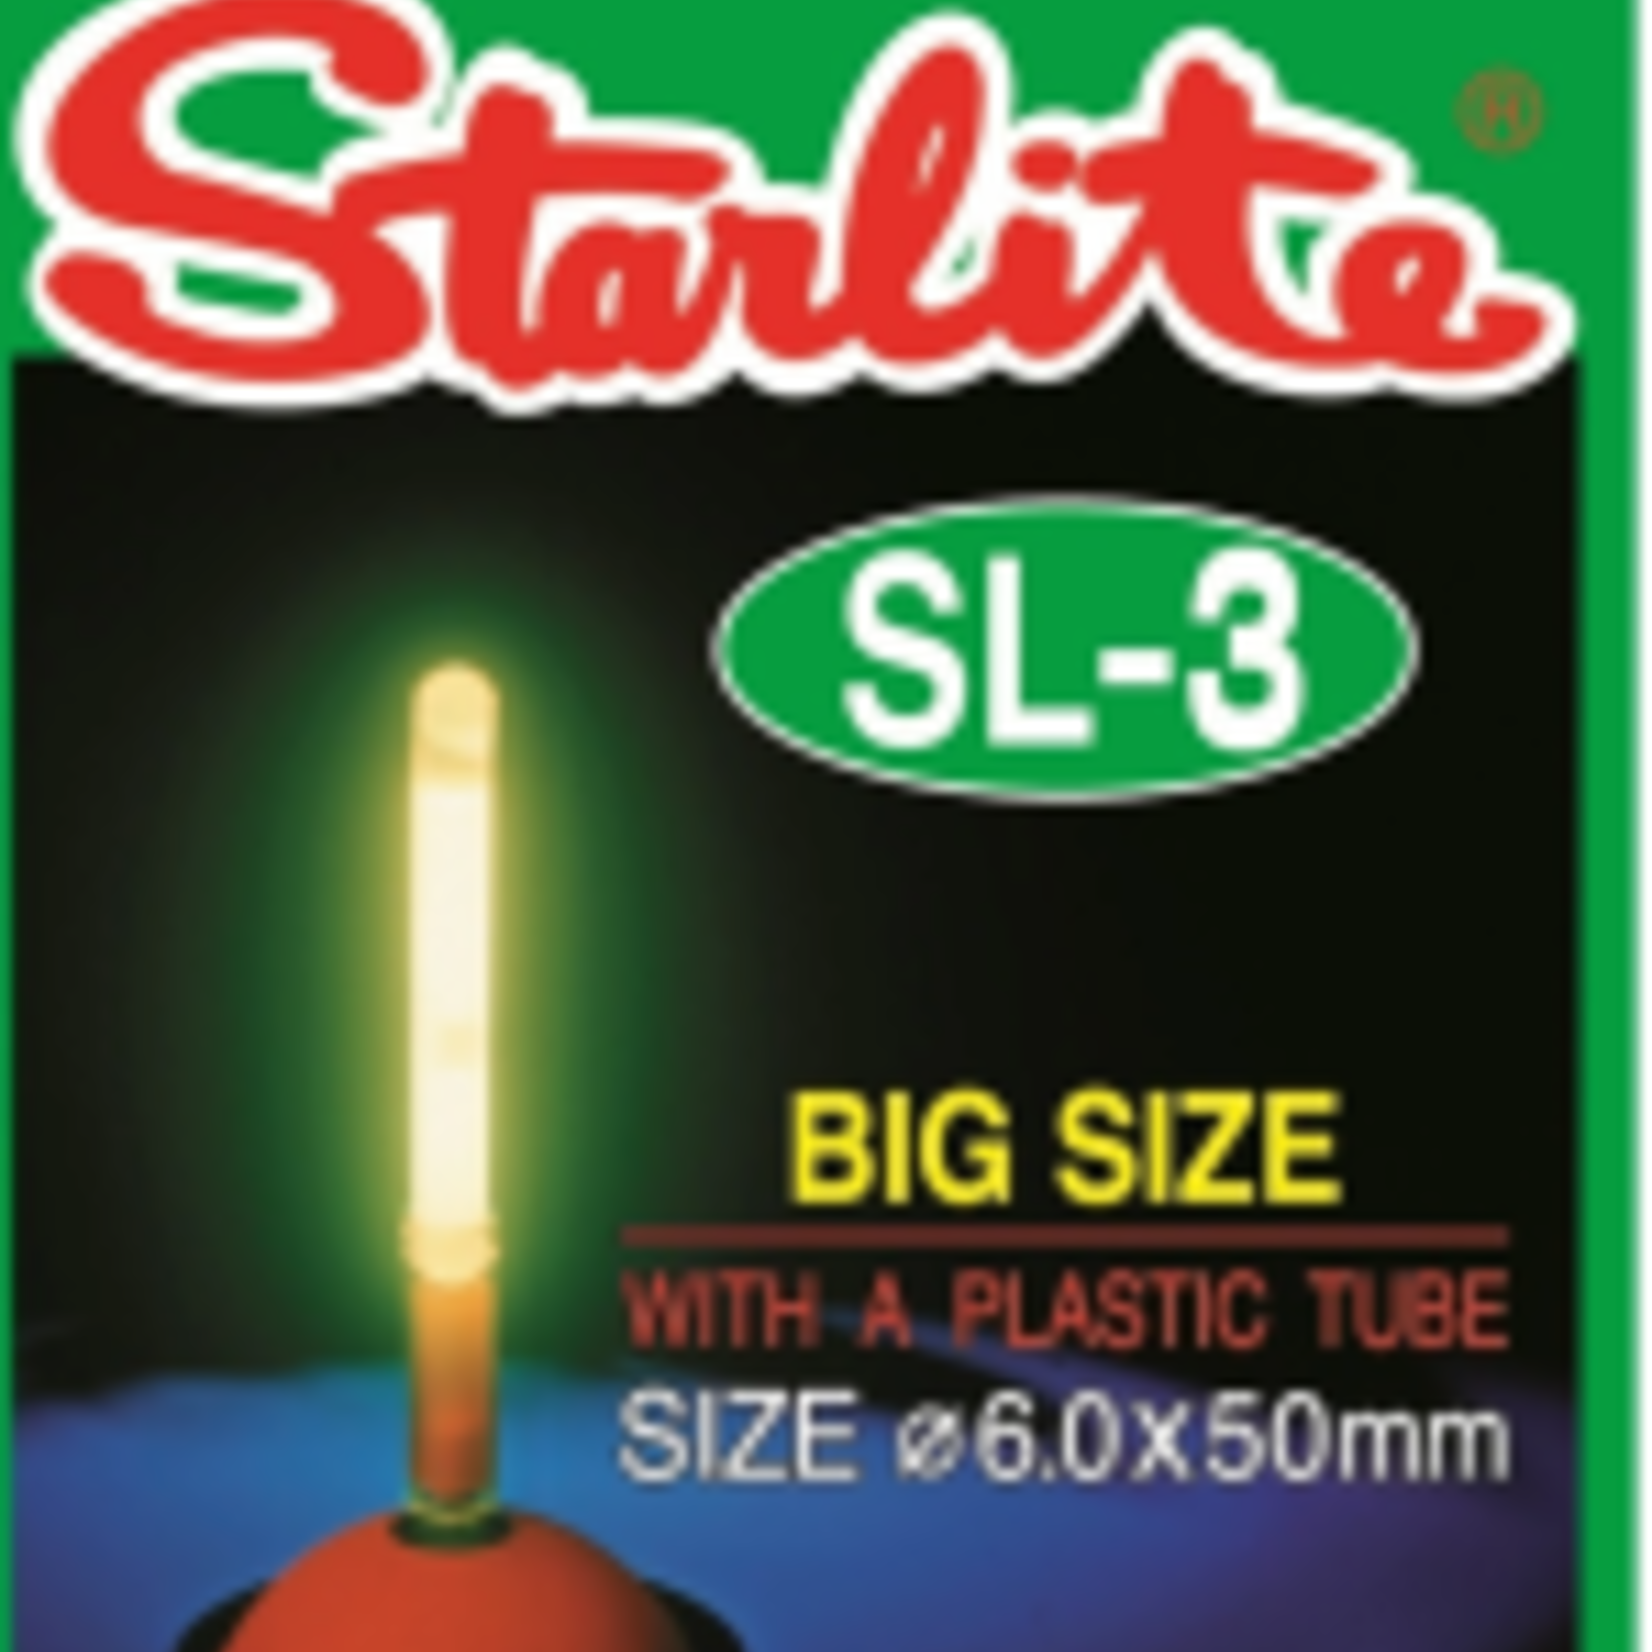 Starlite Glow Rod Tip Lights